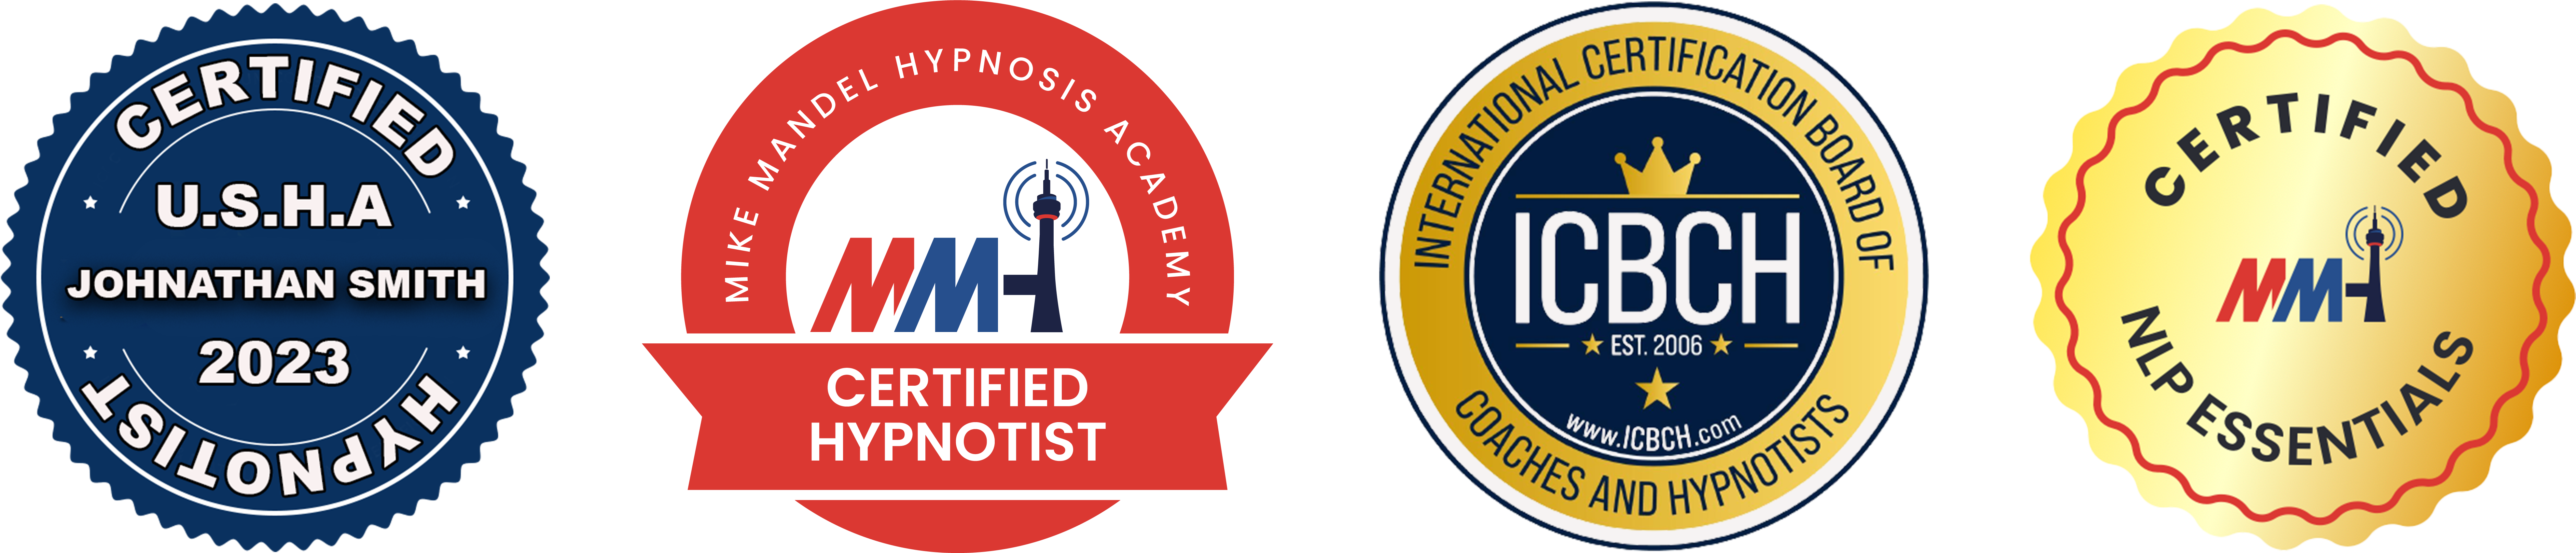 Certified Hypnotist and NLP Essential Certified